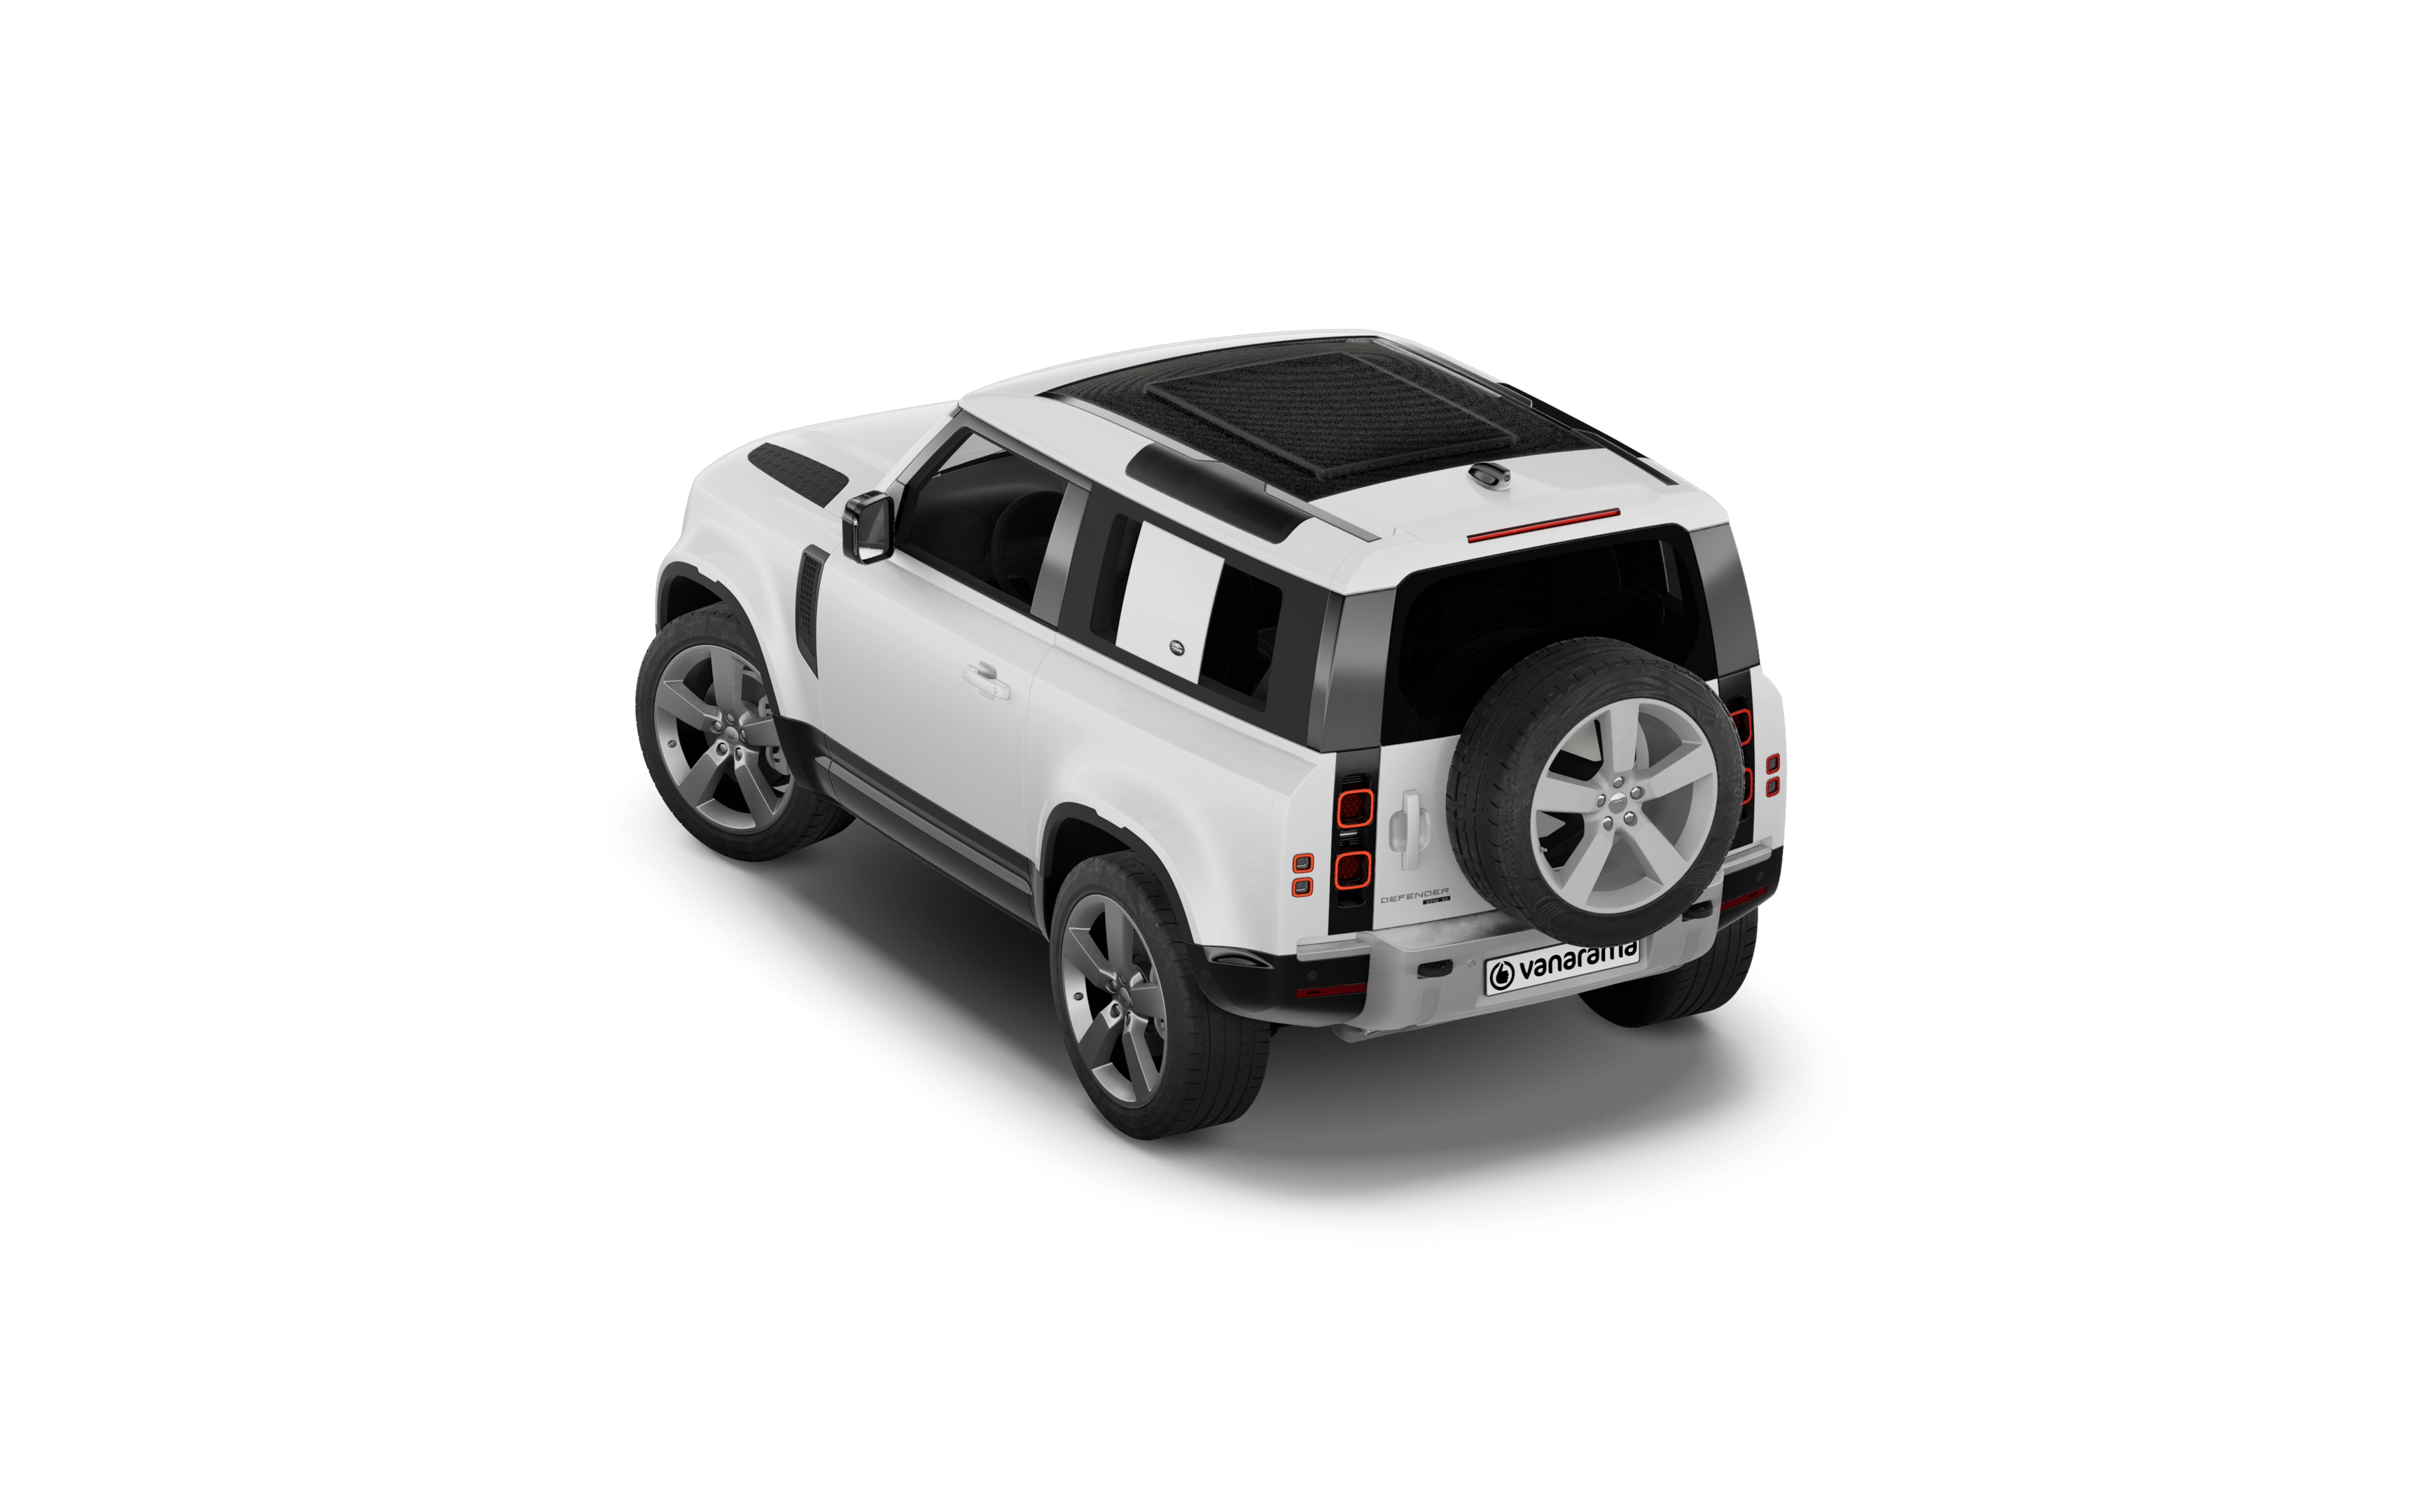 Land rover defender estate 3.0 d300 x-dynamic se 110 5 doors auto [6 seat]